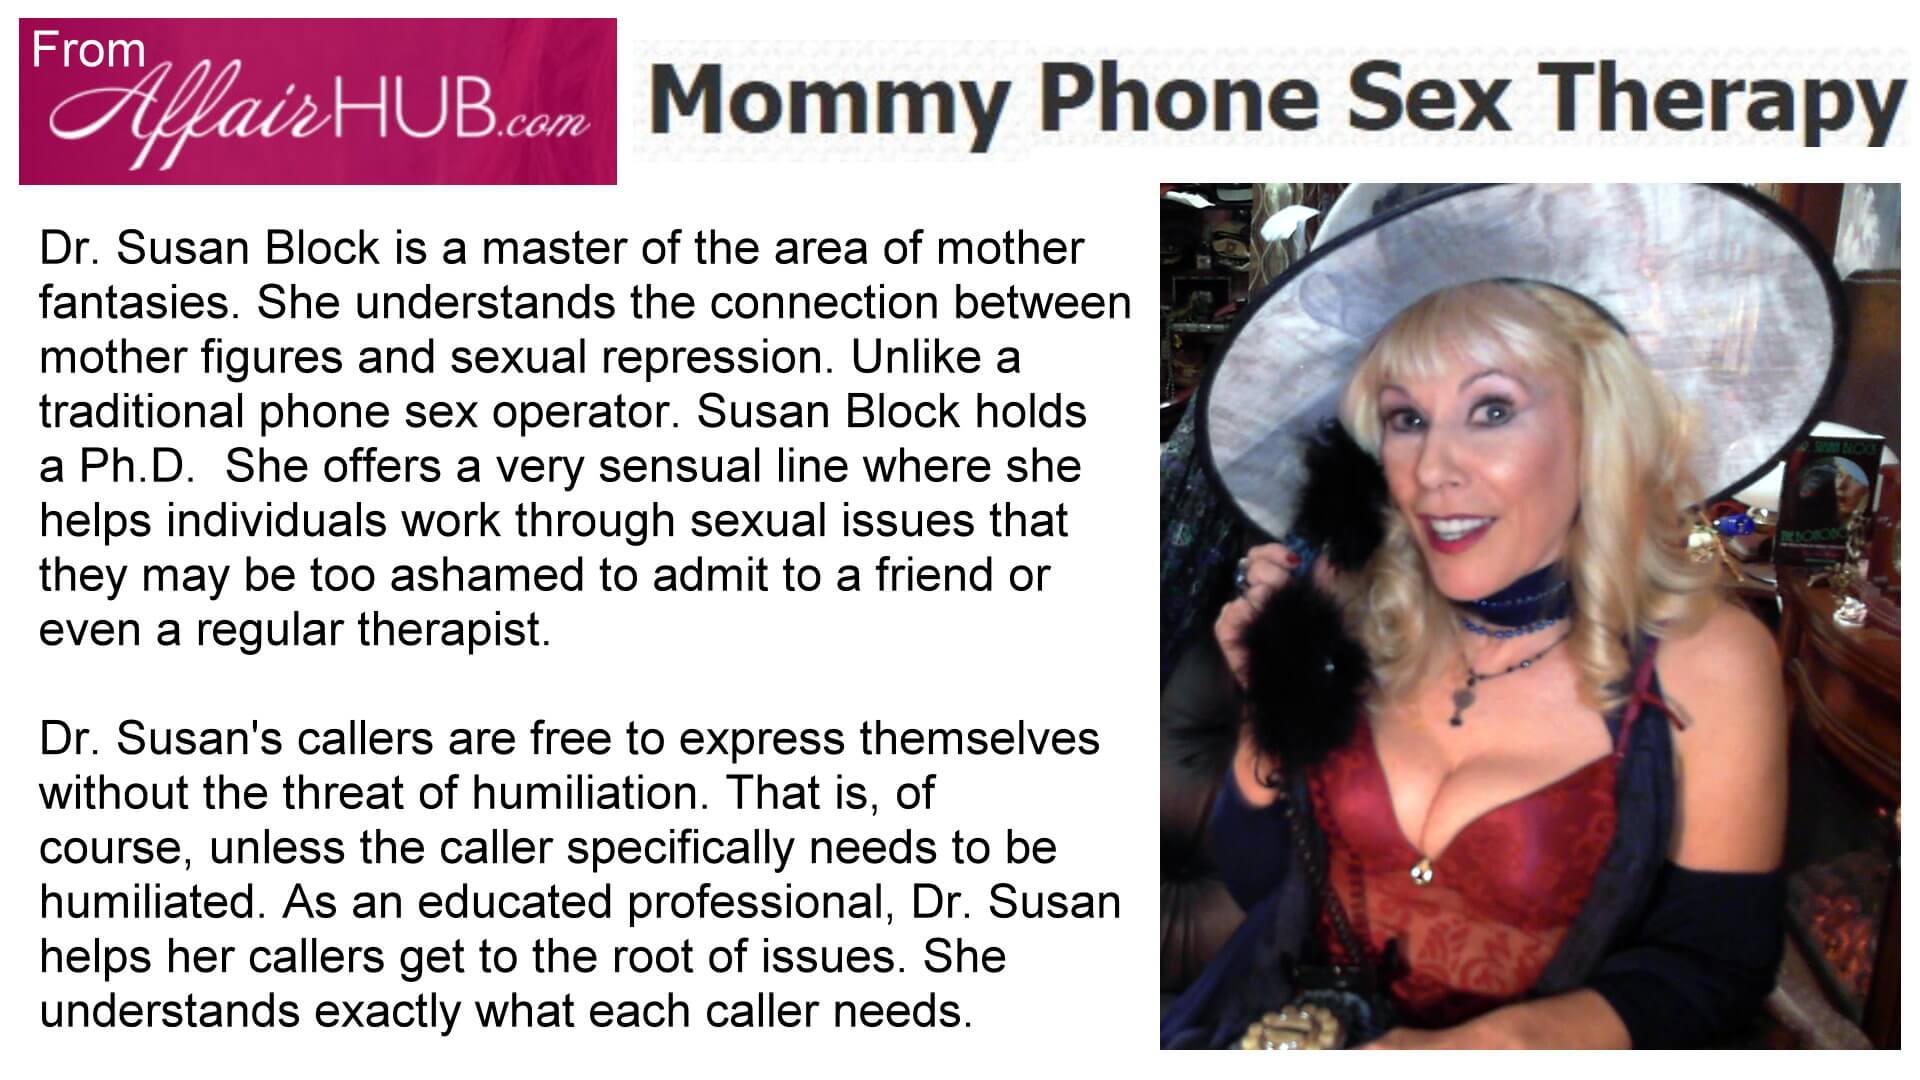 Sex Surrogate Mom - Mom Phone Sex Therapy - Dr Susan Block Institute